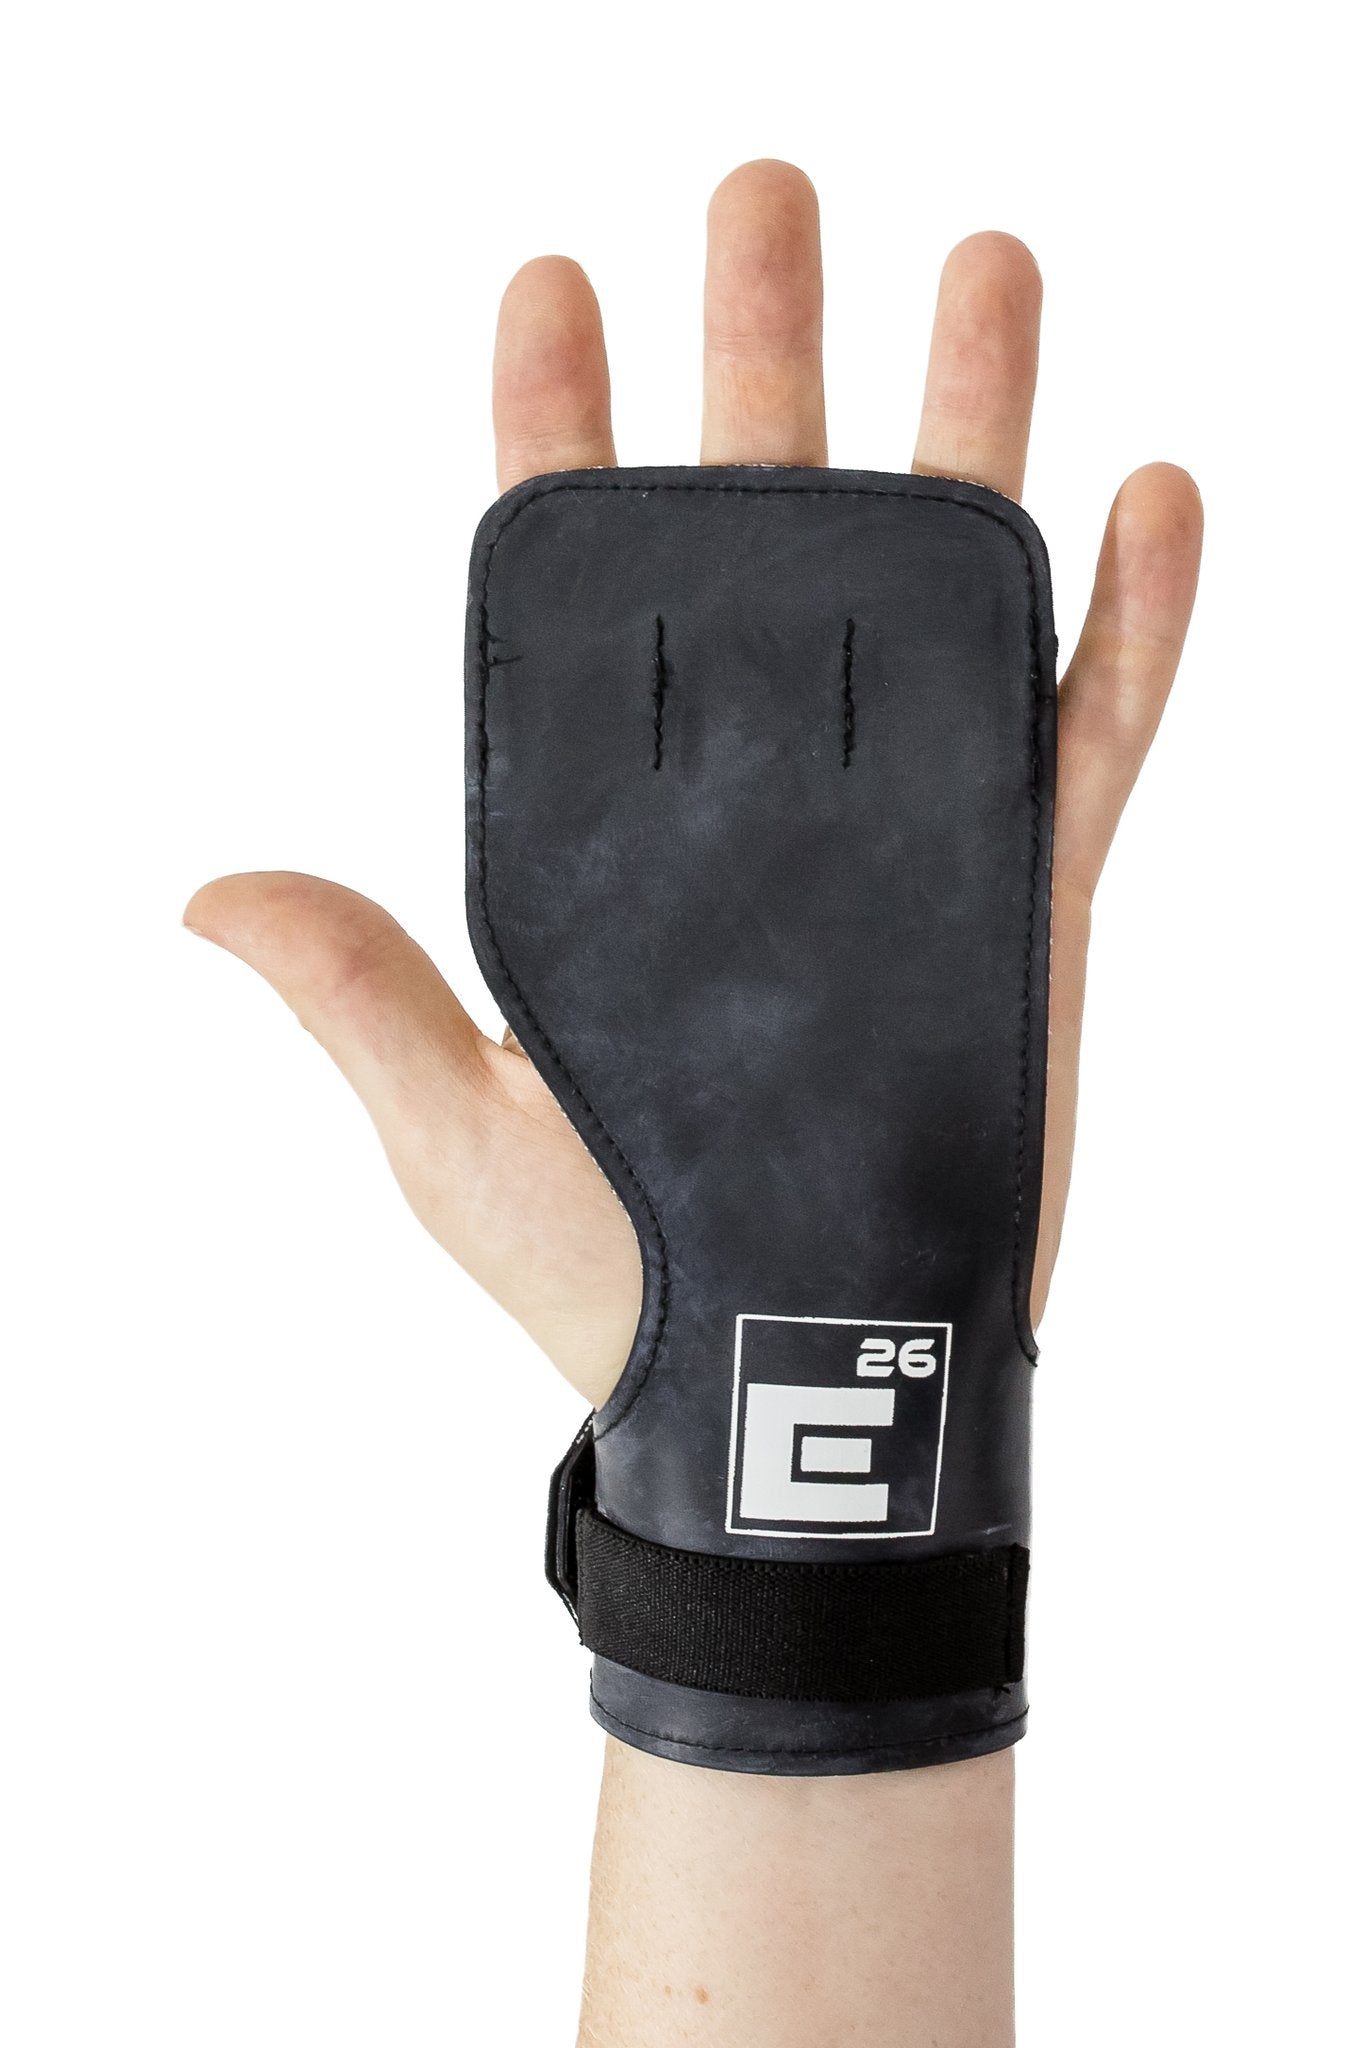 Element 26 Brand - Isoprene Polymere Hand Grips